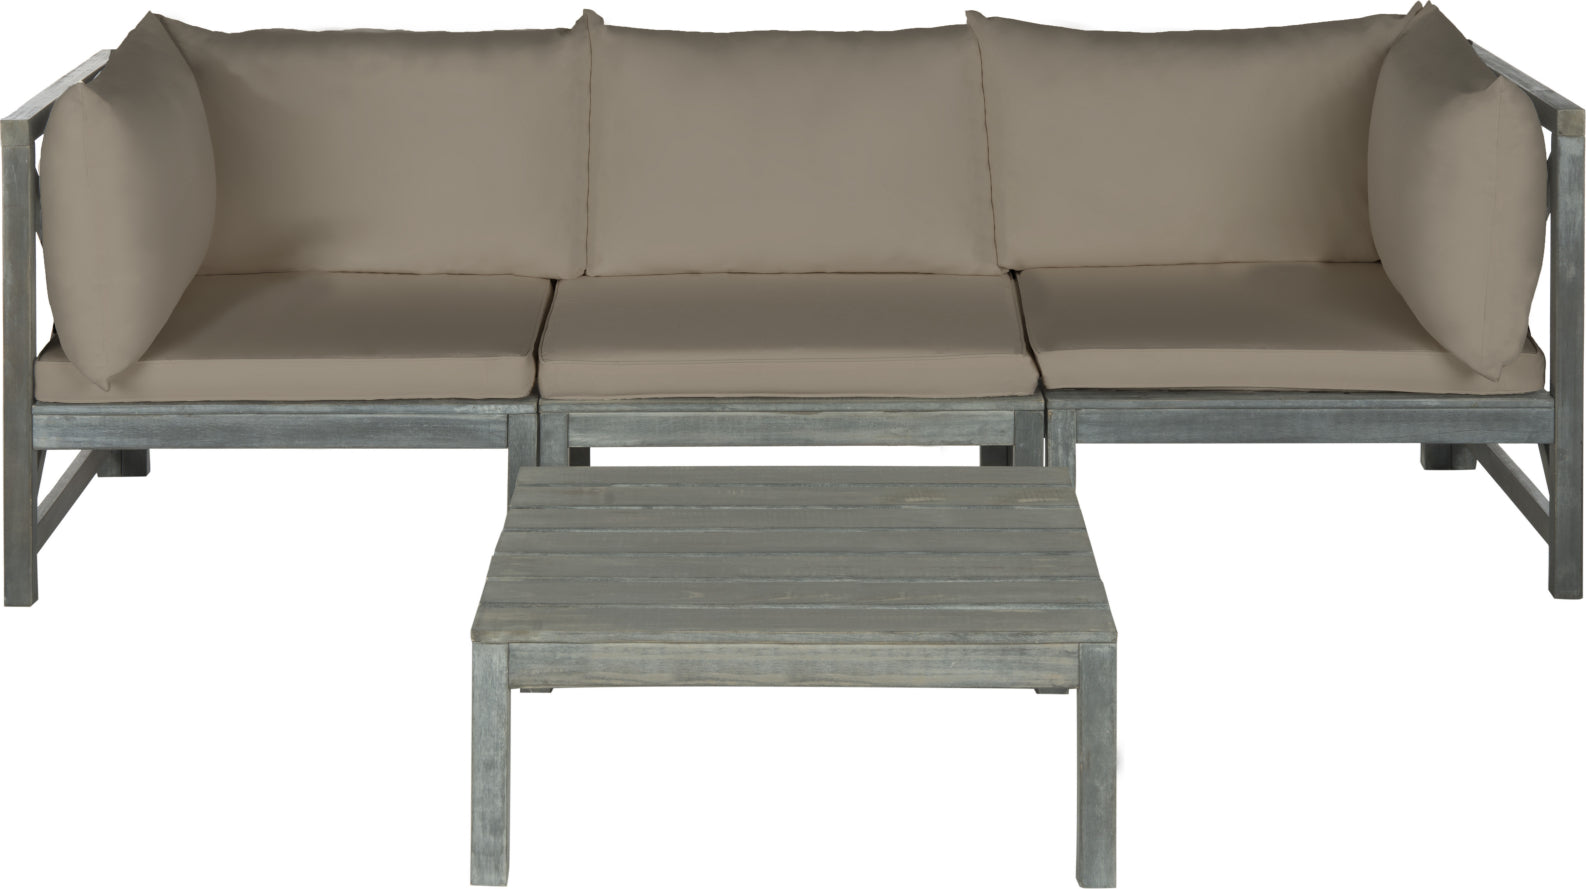 Safavieh Lynwood Modular Outdoor Sectional Ash Grey/Taupe Furniture main image